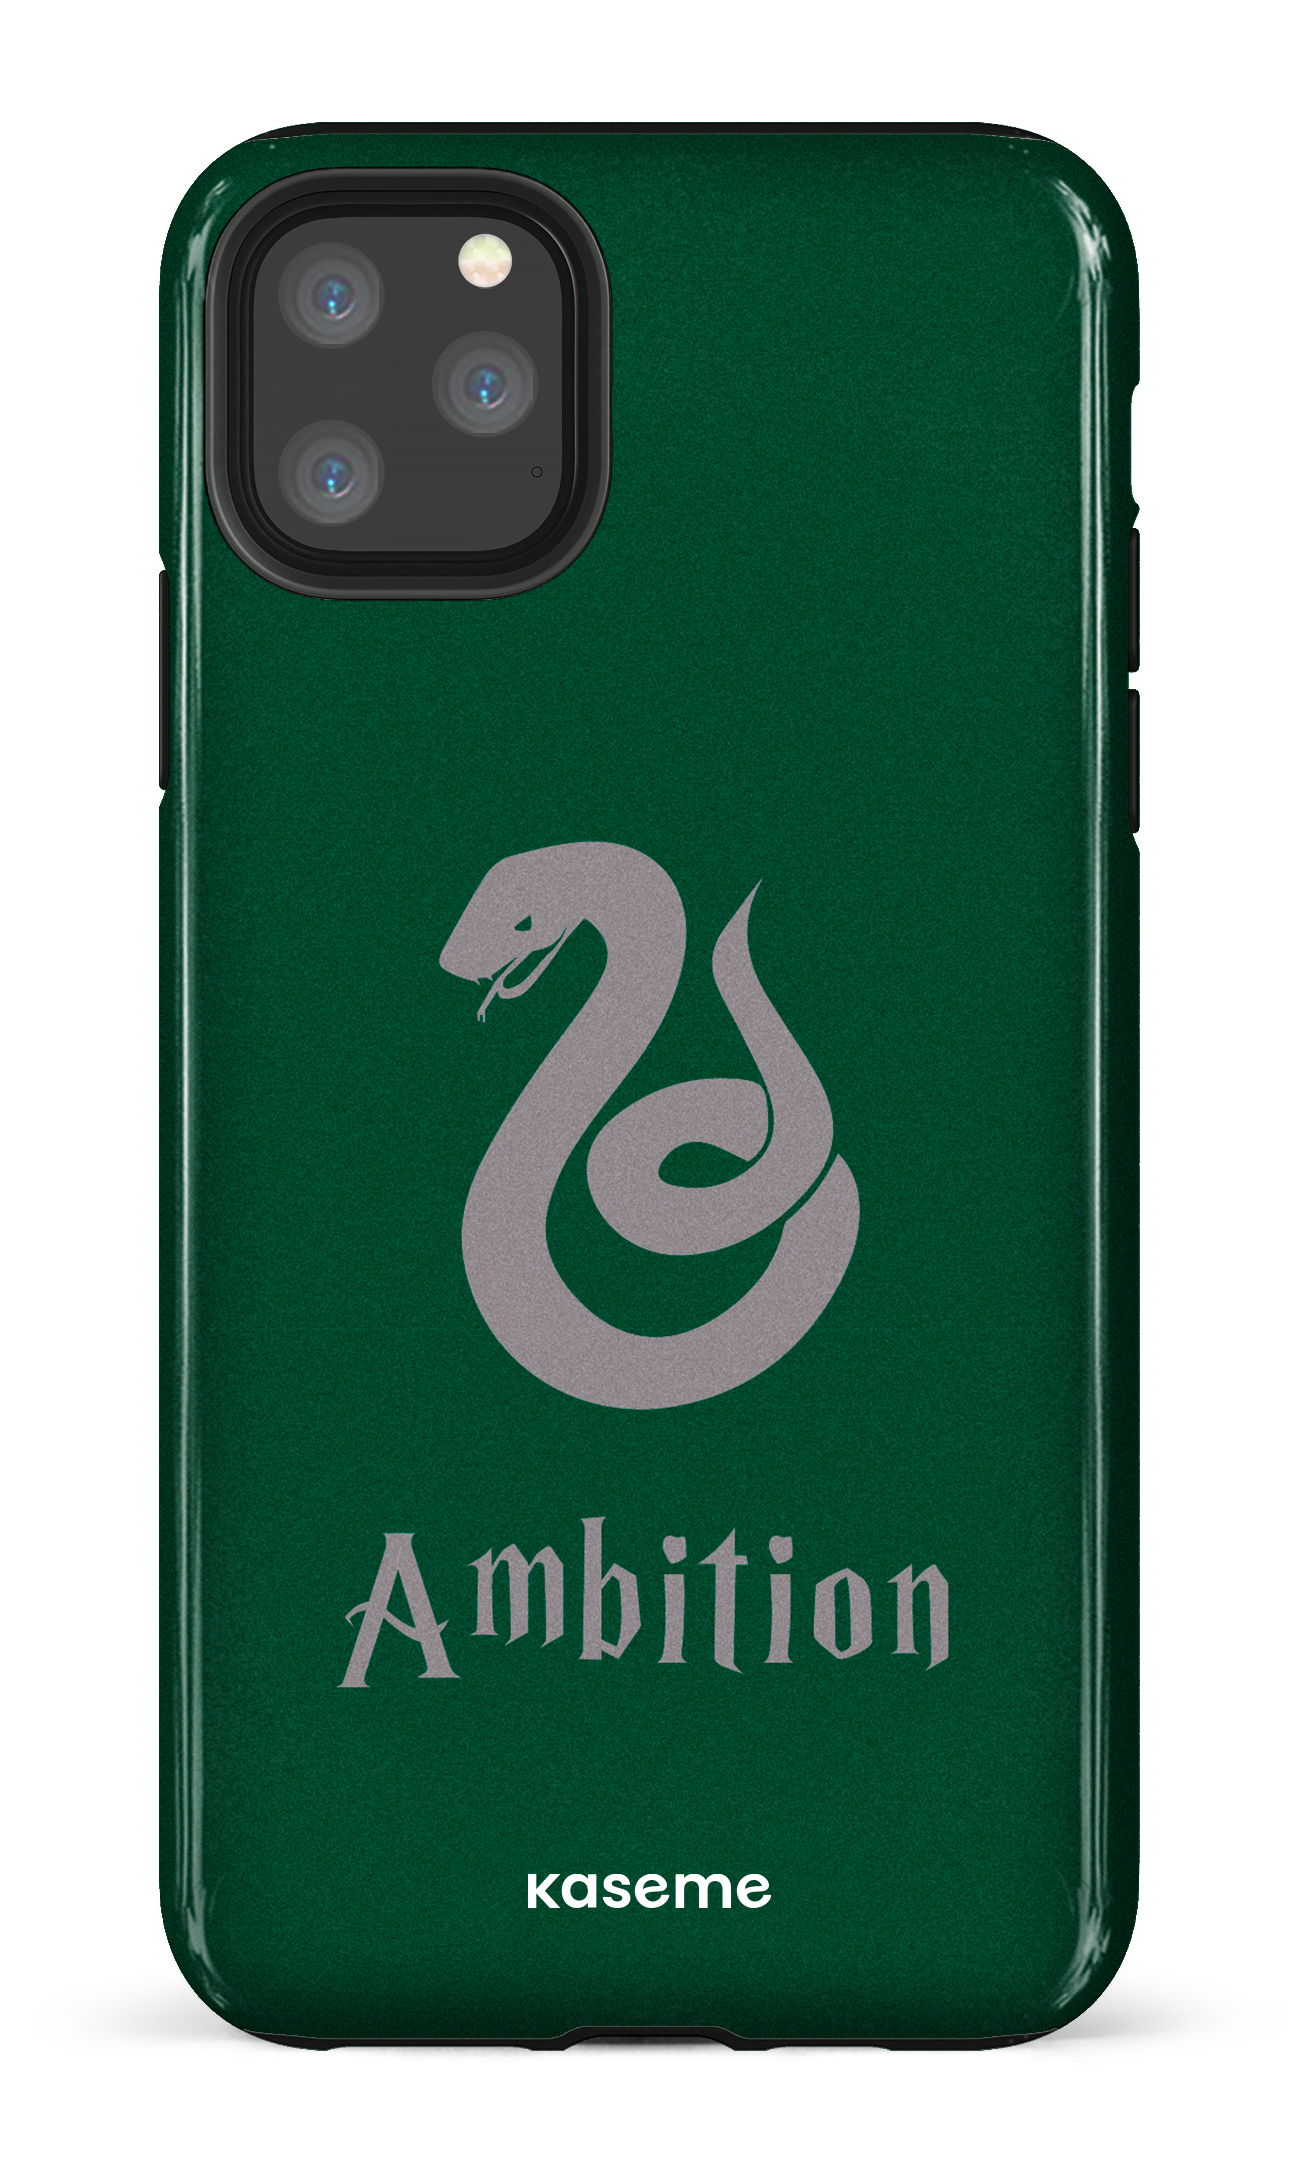 Ambition - iPhone 11 Pro Max